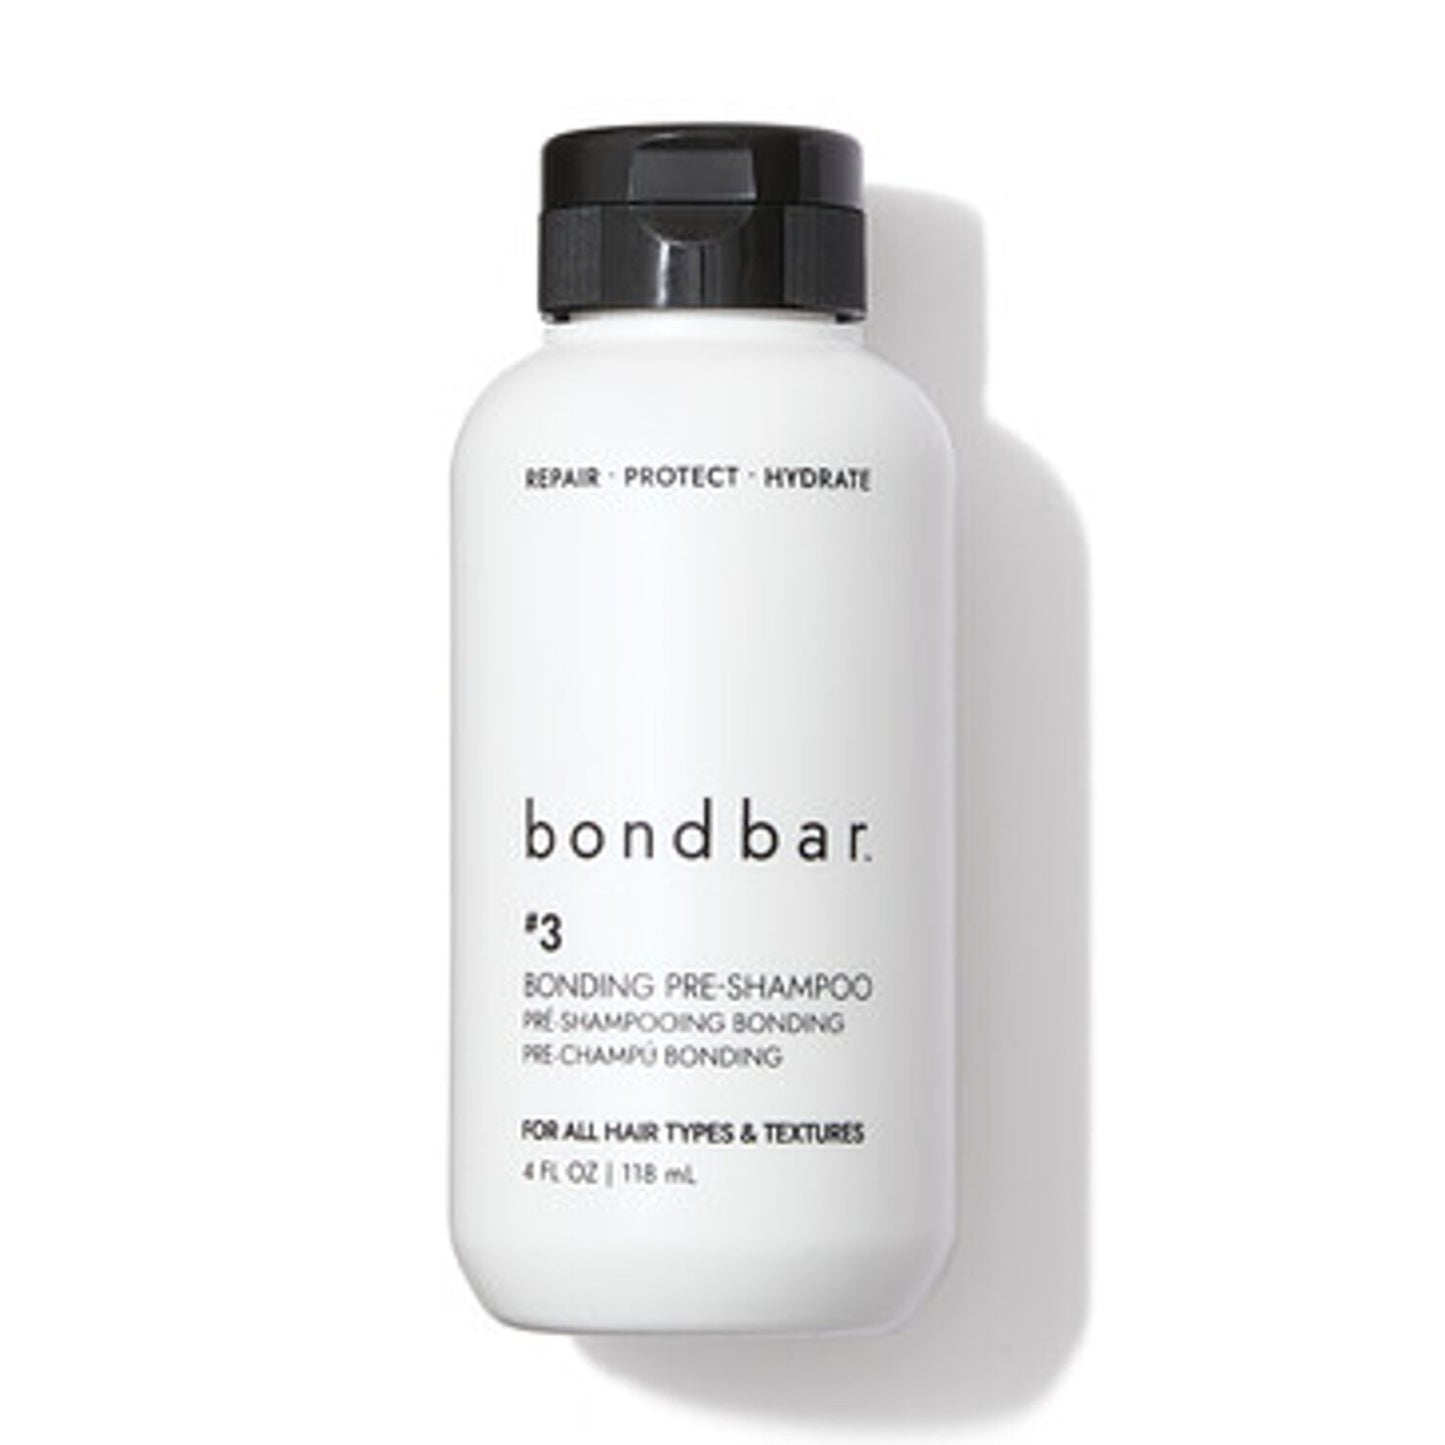 bondbar #3 Bonding Pre-Shampoo